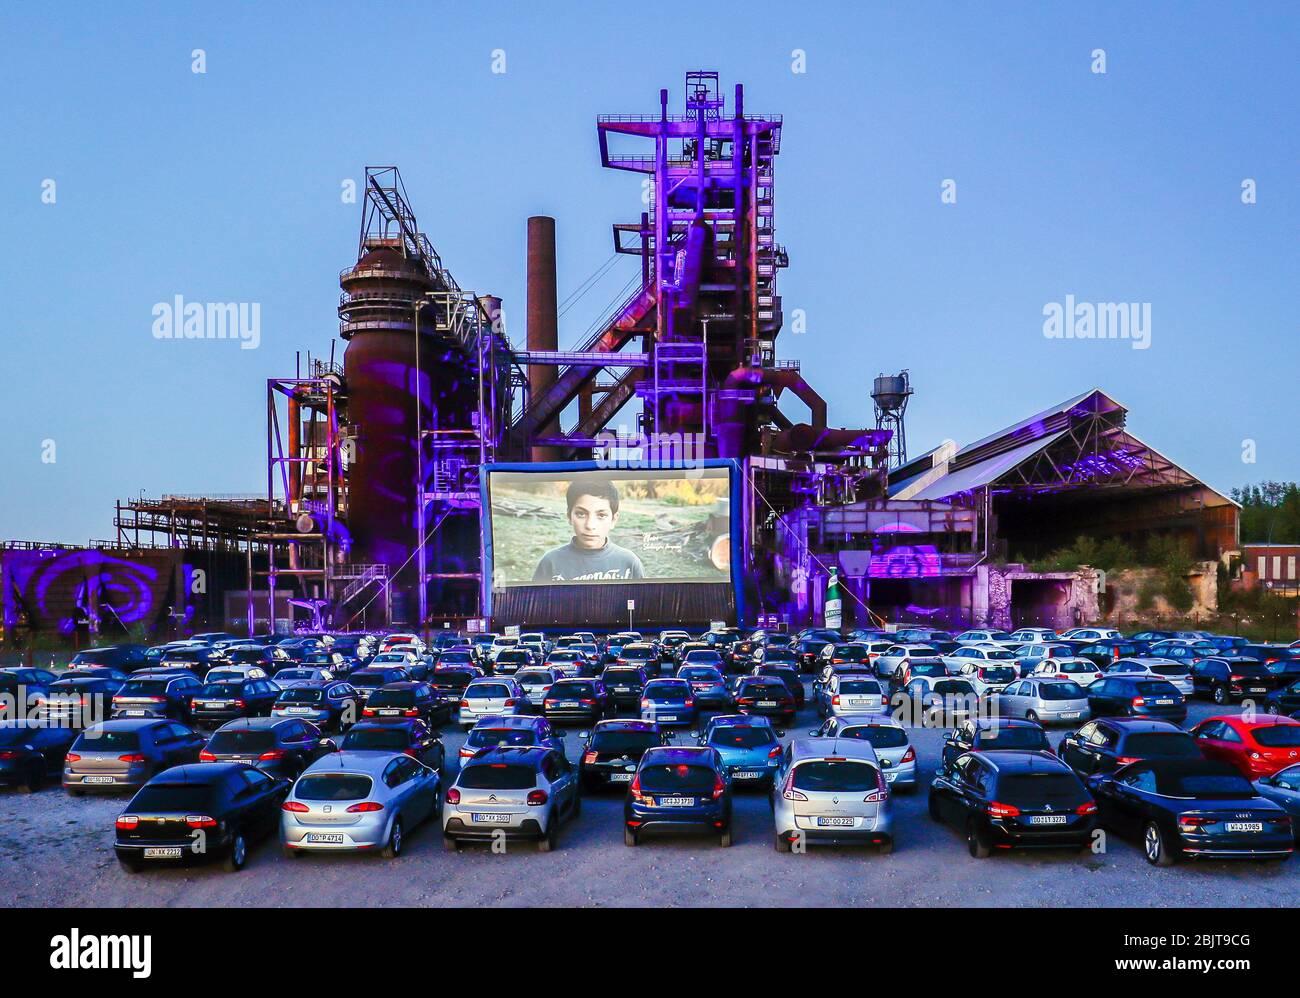 20.04.2020, Dortmund, Ruhr area, North Rhine-Westphalia, Germany - drive-in cinema Dortmund, newly opened drive-in cinema in front of the former blast Stock Photo